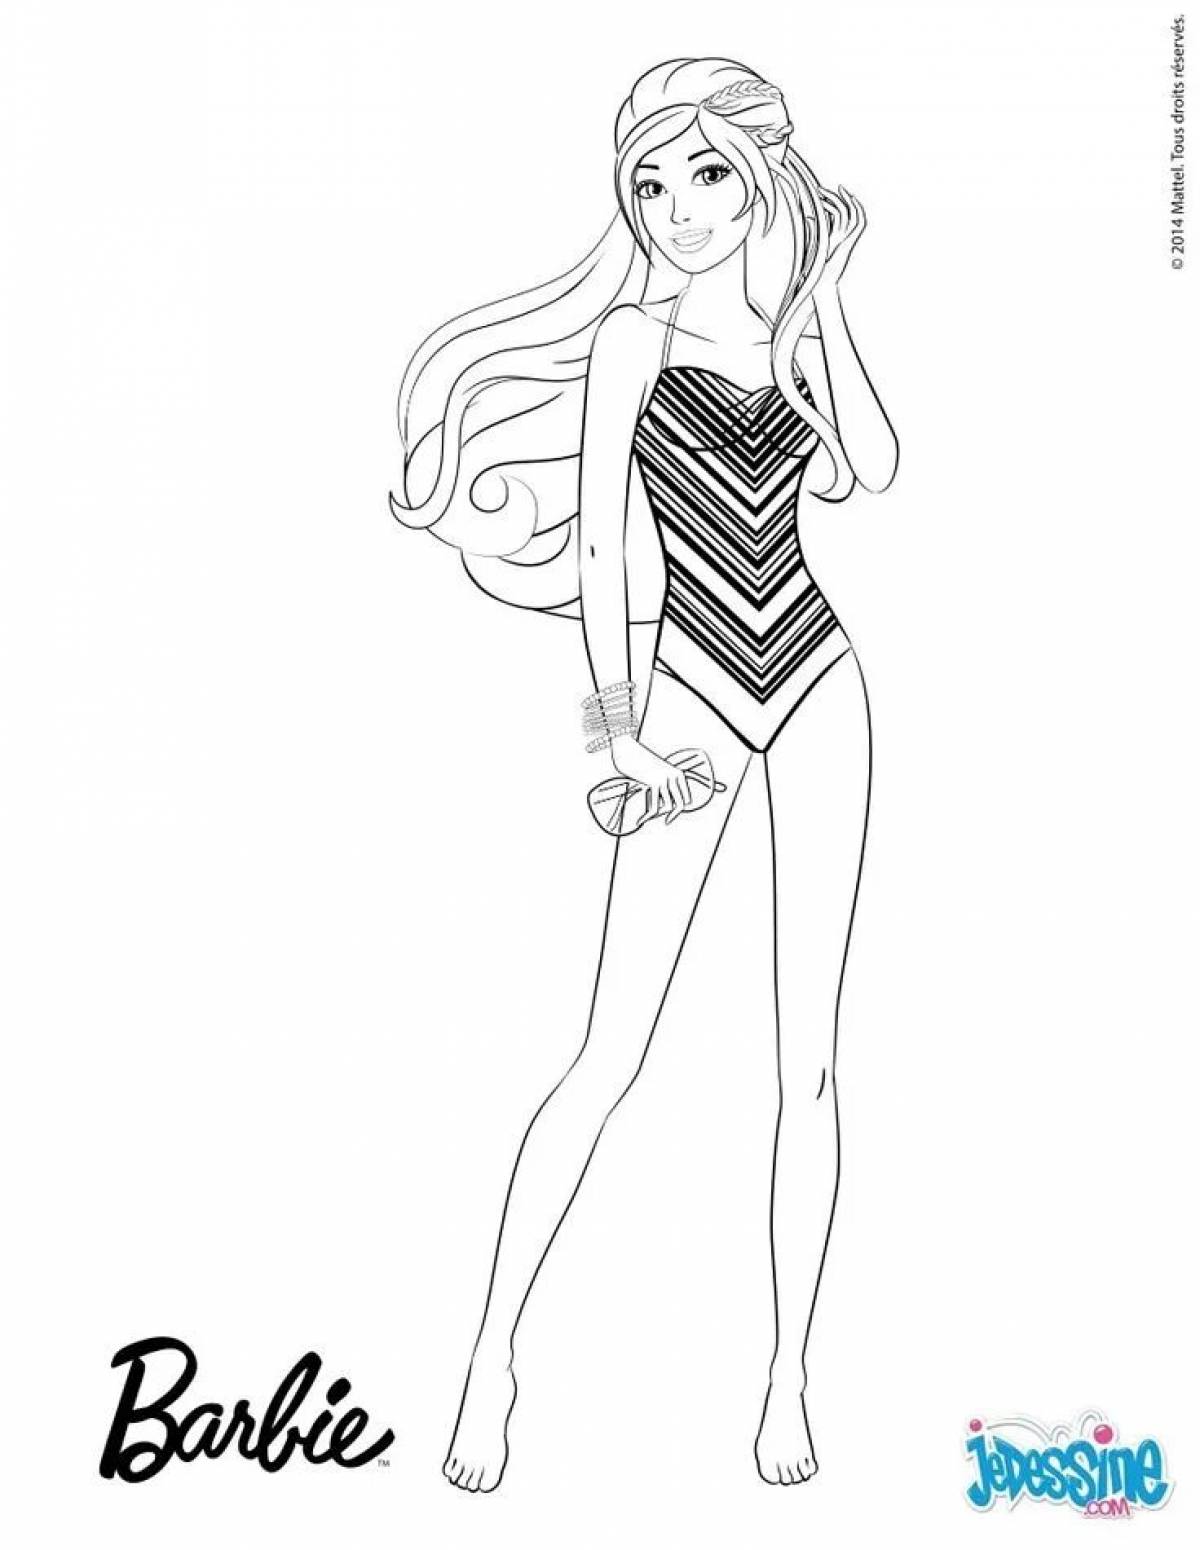 Barbie in swimsuit #4